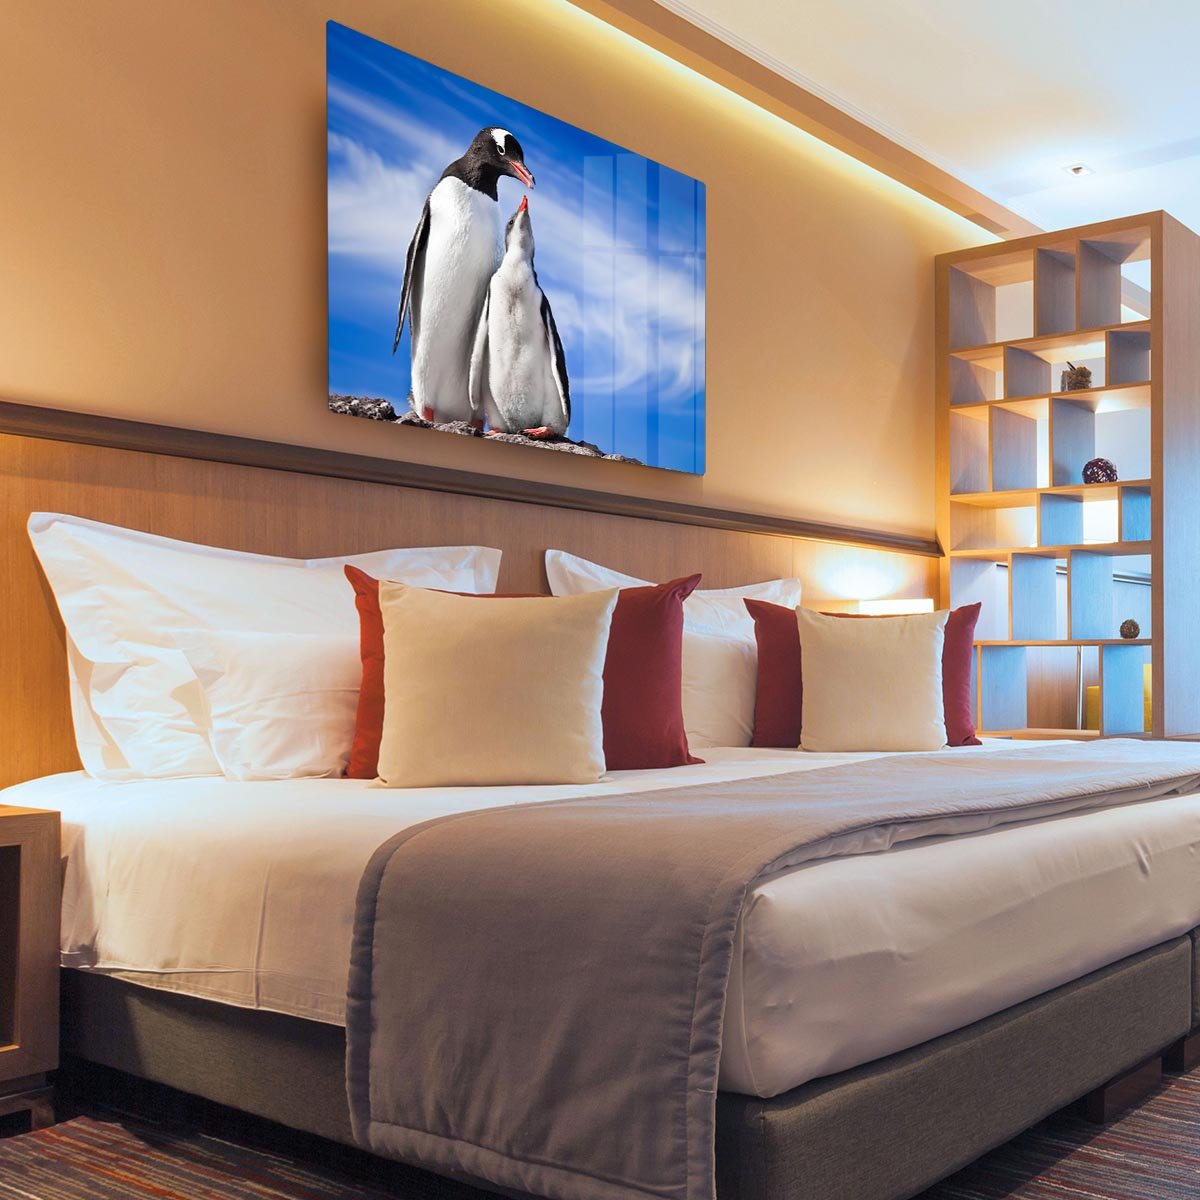 Two penguins resting HD Metal Print - Canvas Art Rocks - 3